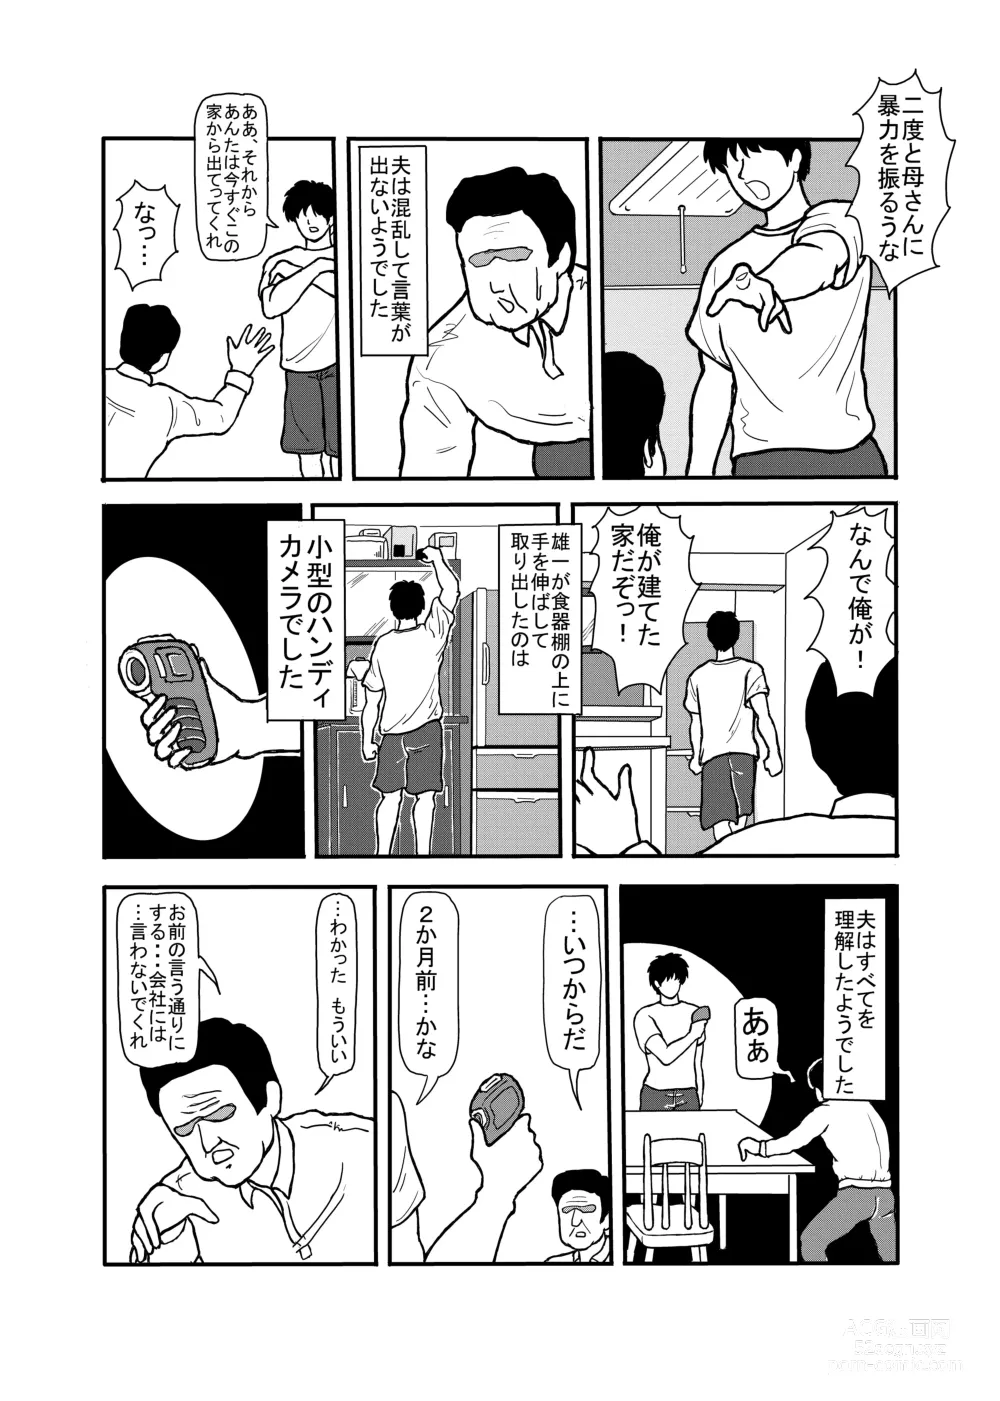 Page 13 of doujinshi 息子と二人きりで暮らすことになりました―初めての膣内射精―